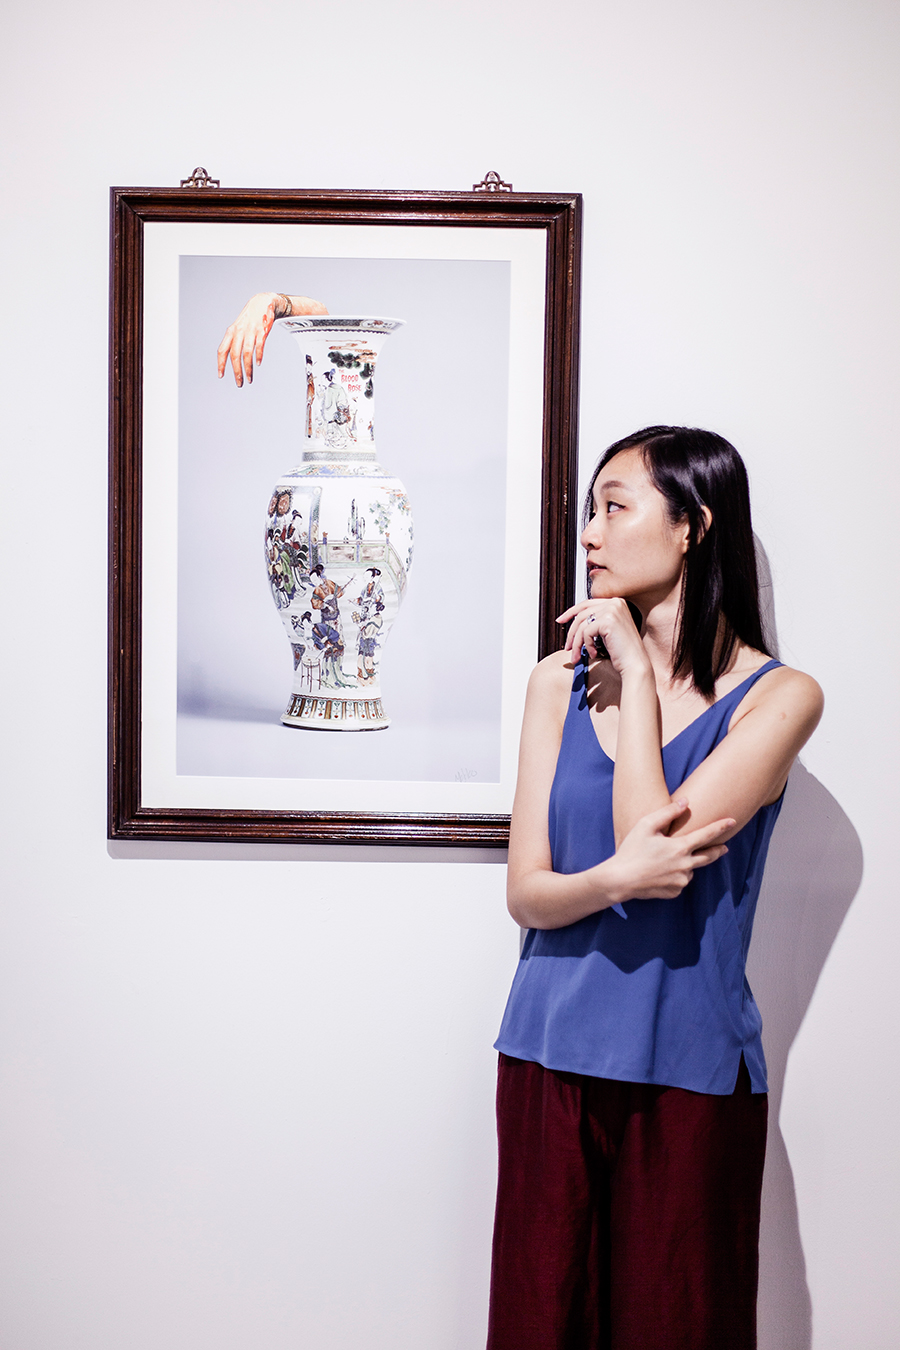 Mojoko 'Sick Scents' exhibition at Chan + Hori Contemporary, Singapore.